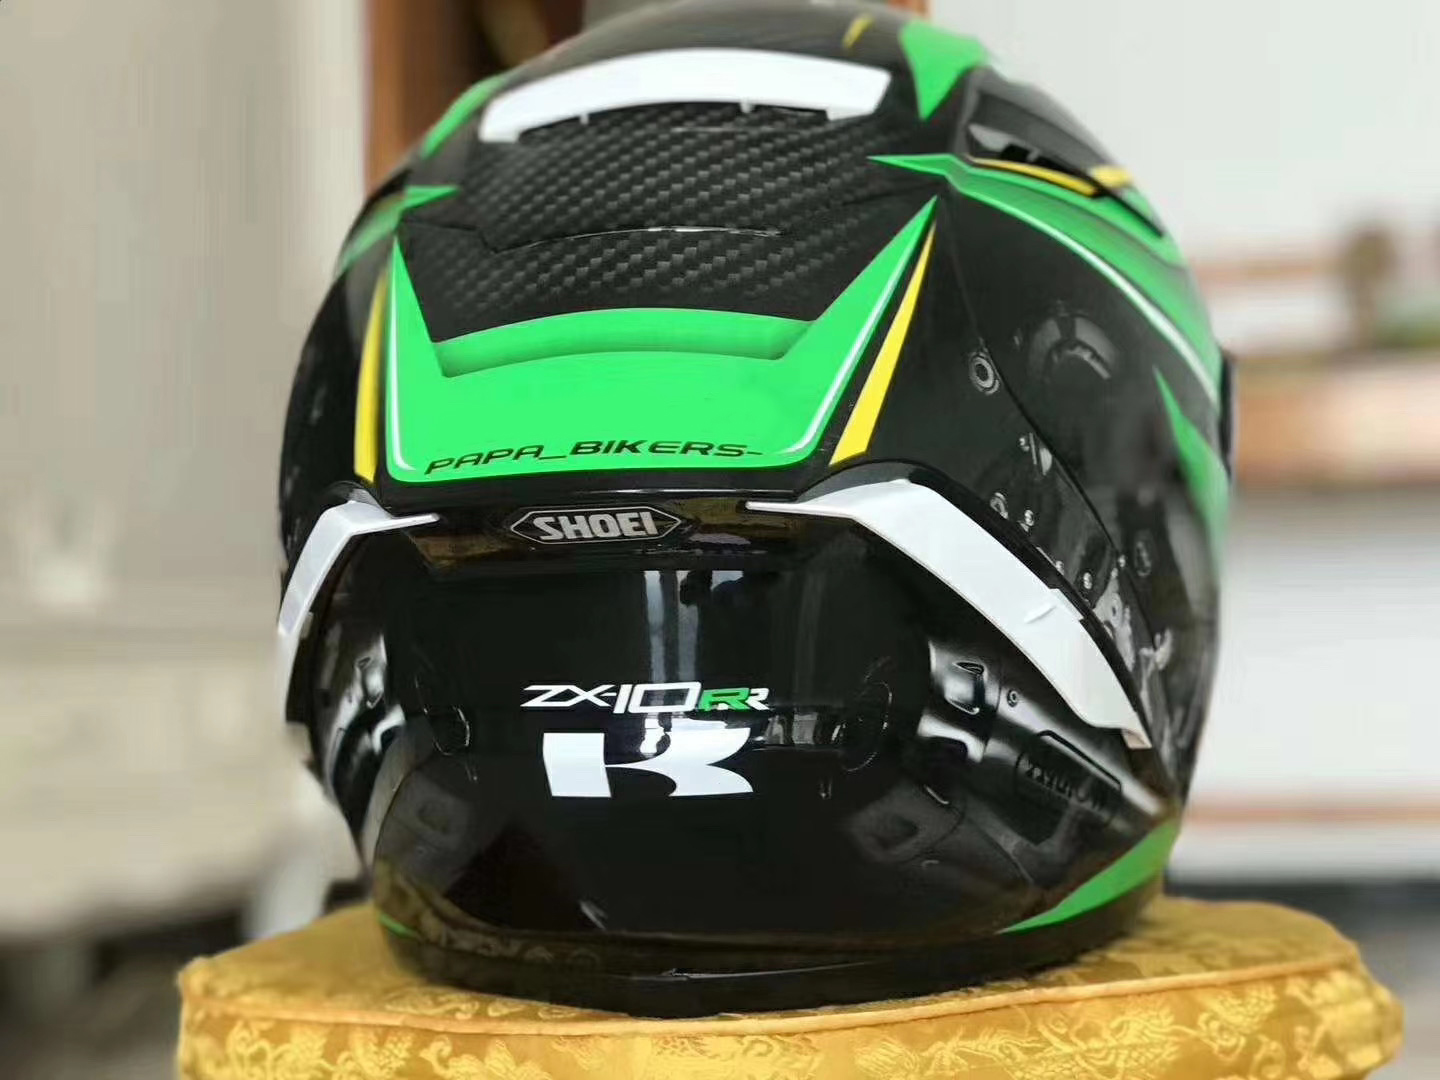 Full Face Motorcycle helmet X14 Kawa ZX-10RR Helmet Riding Motocross Racing Motobike Helmet